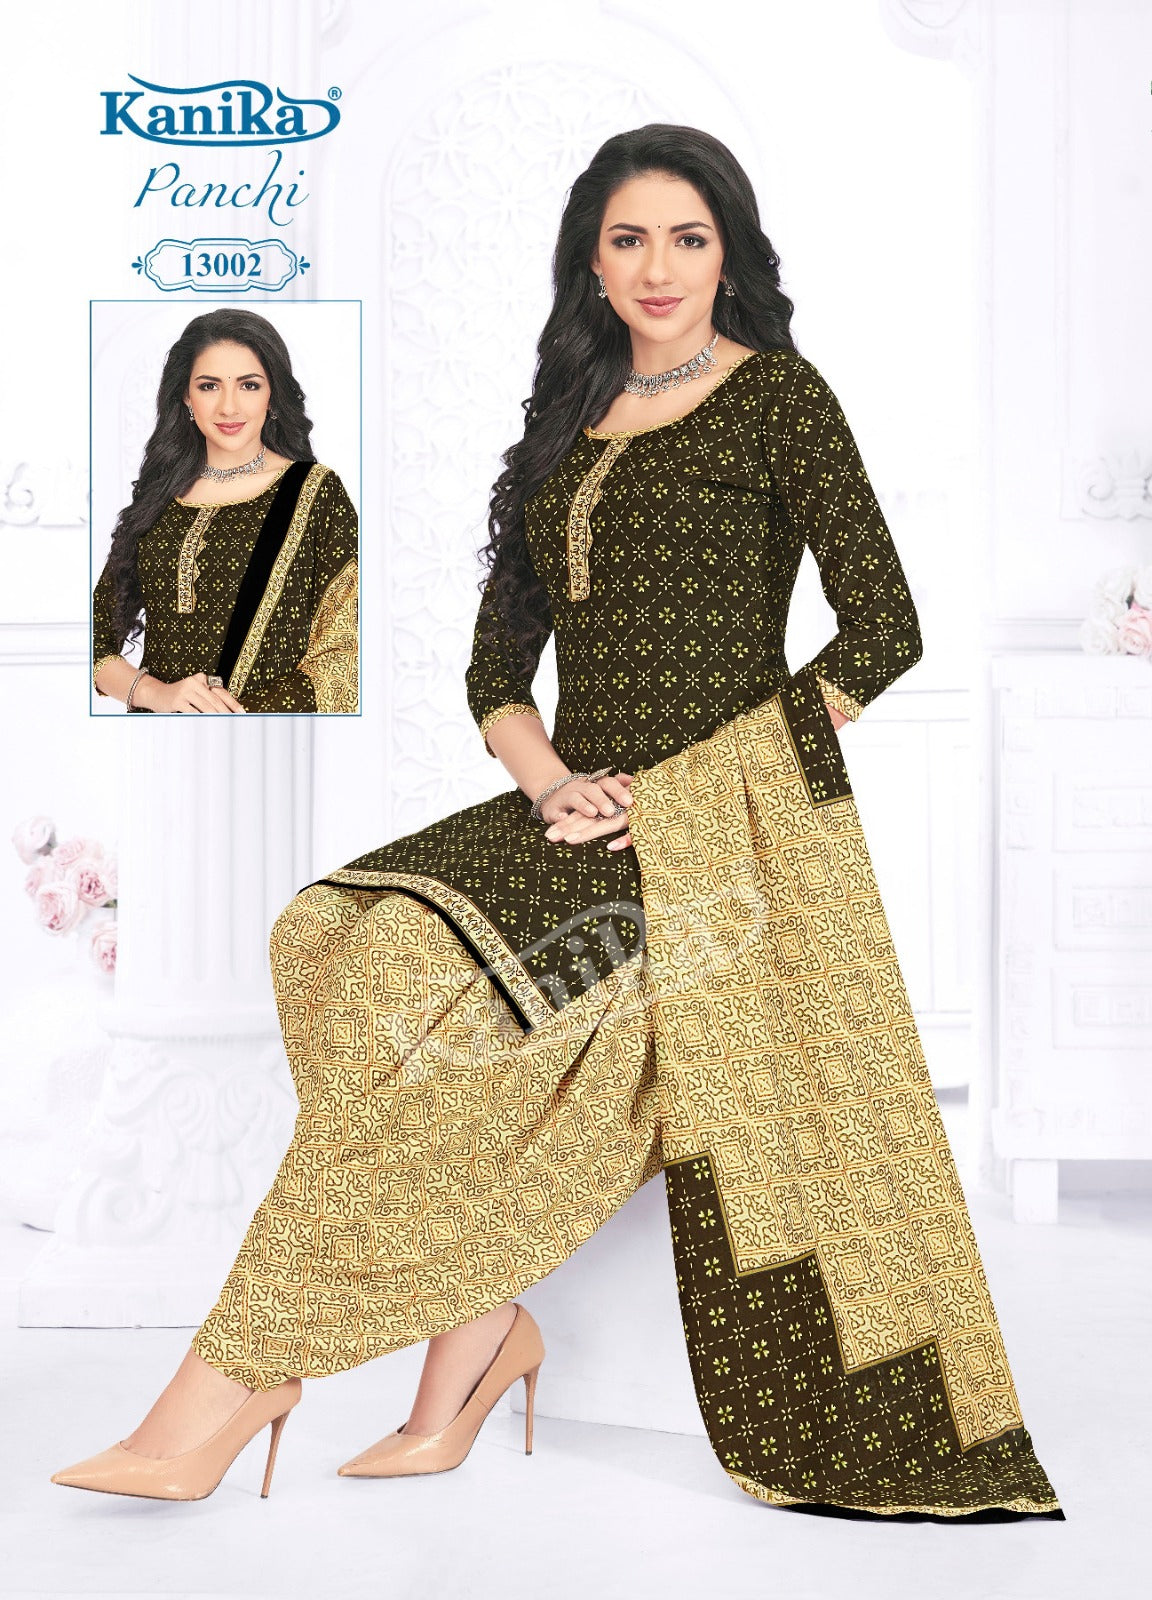 Panchi Vol 13 With Lining Kanika Readymade Cotton Patiyala Suits